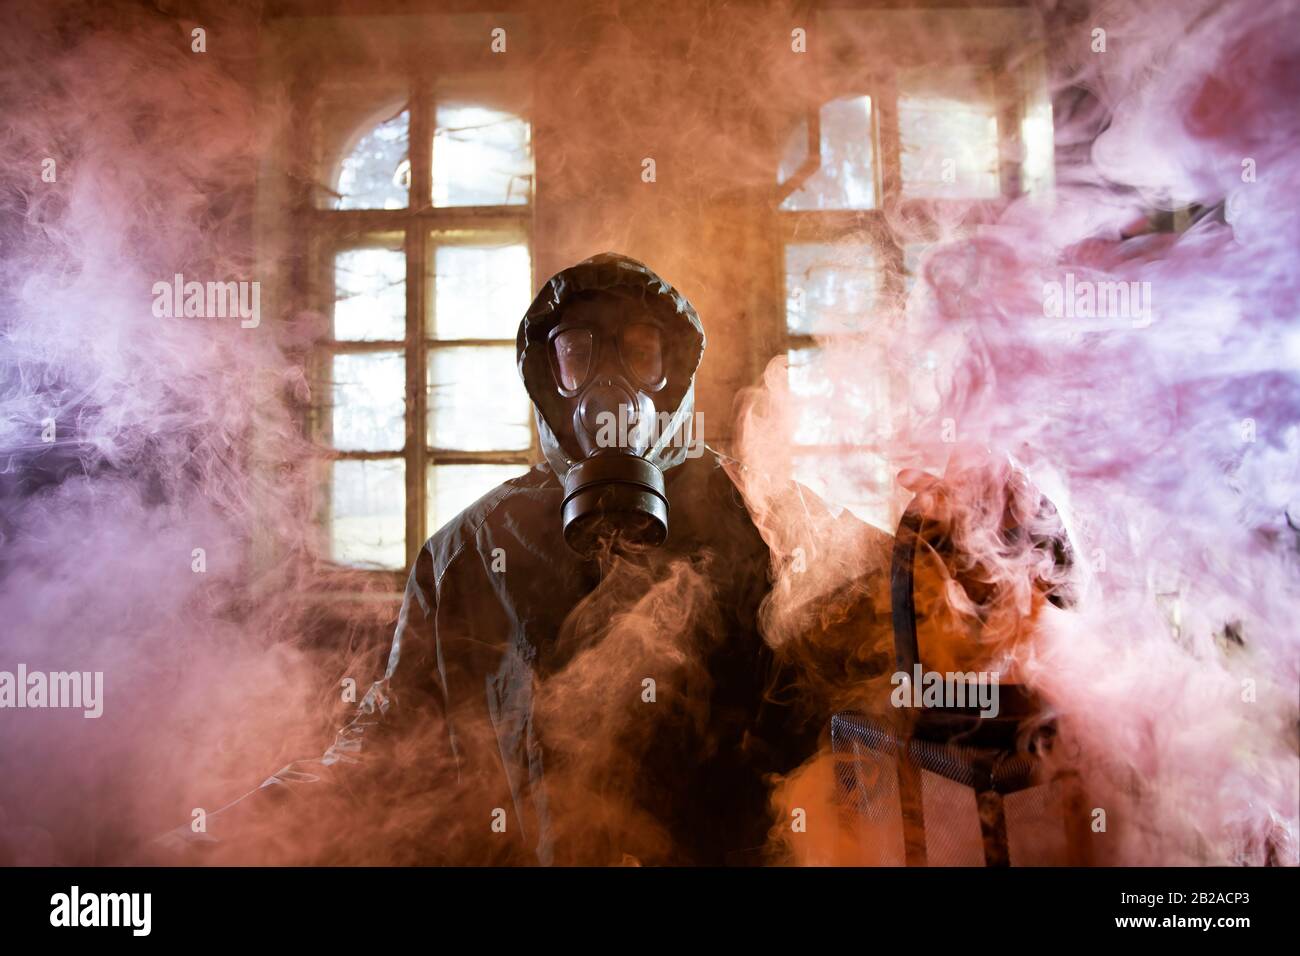 Post apocalyptic survivor in gas mask in the smoke. Environmental disaster, armageddon concept. Stock Photo